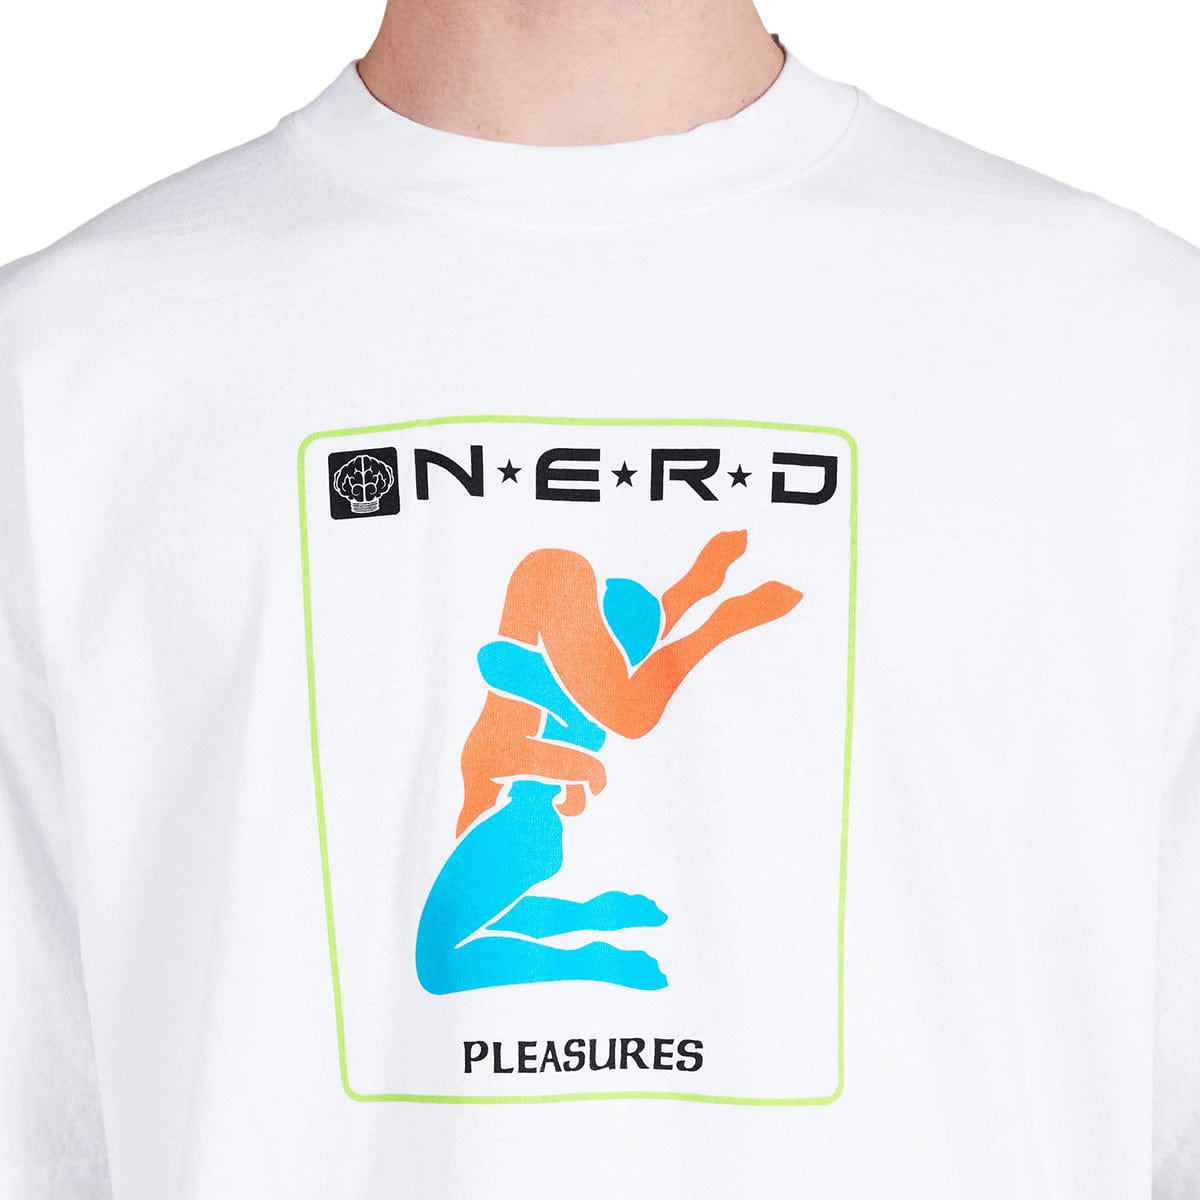 Pleasures T-Shirts PROVIDER T-SHIRT